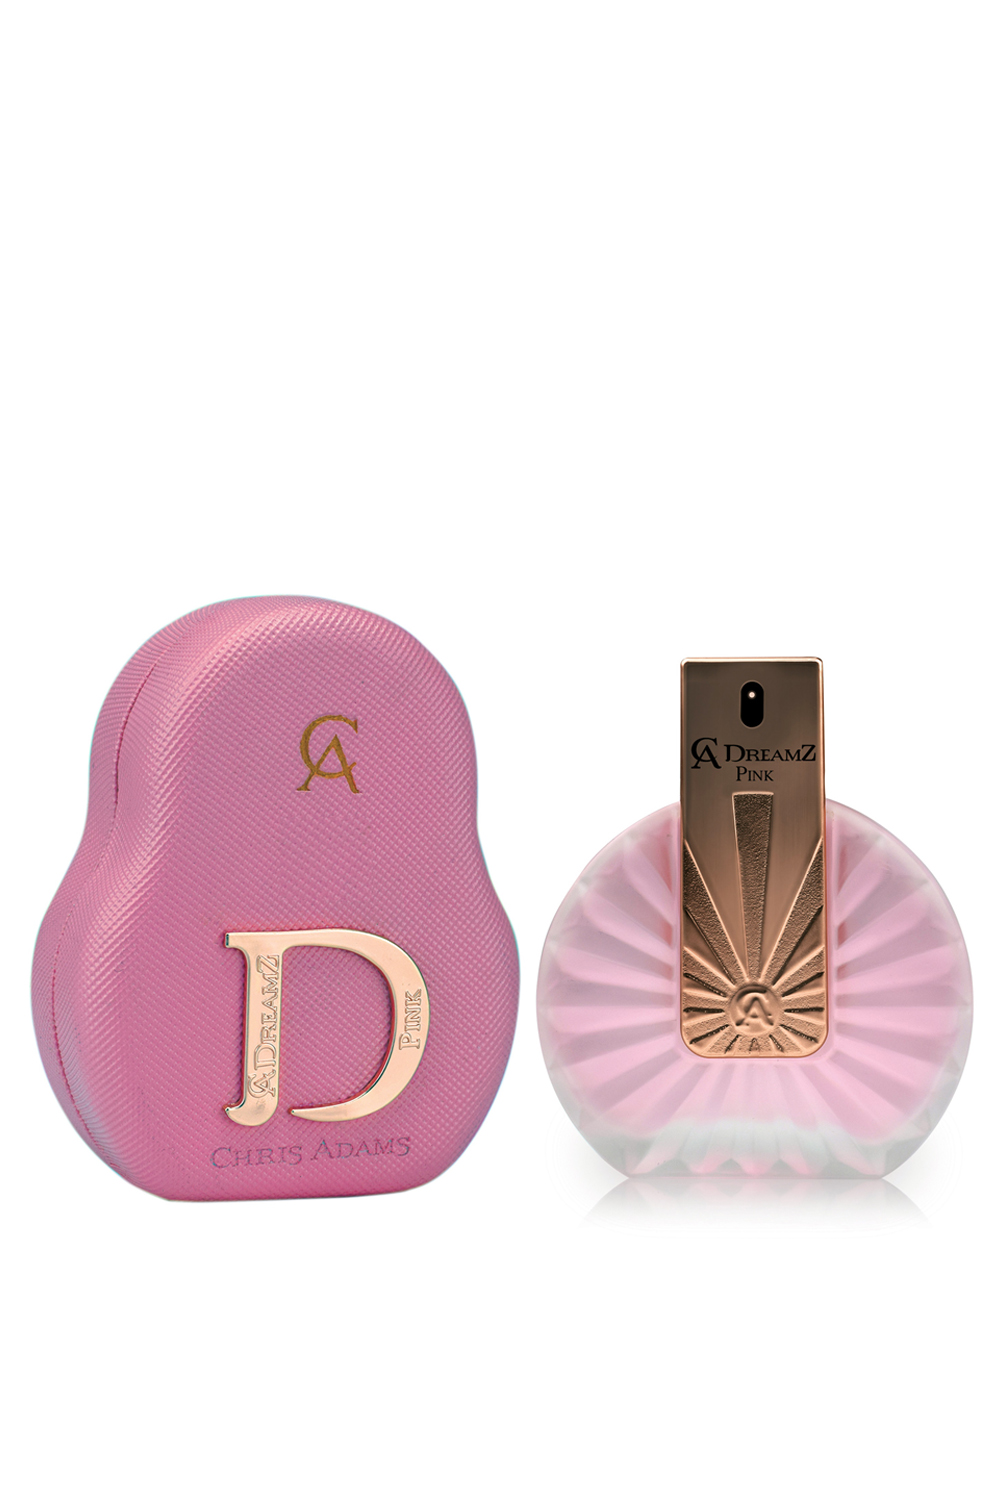 Chris Adams Dreamz Pink Eau de Parfum For Women, 100ml